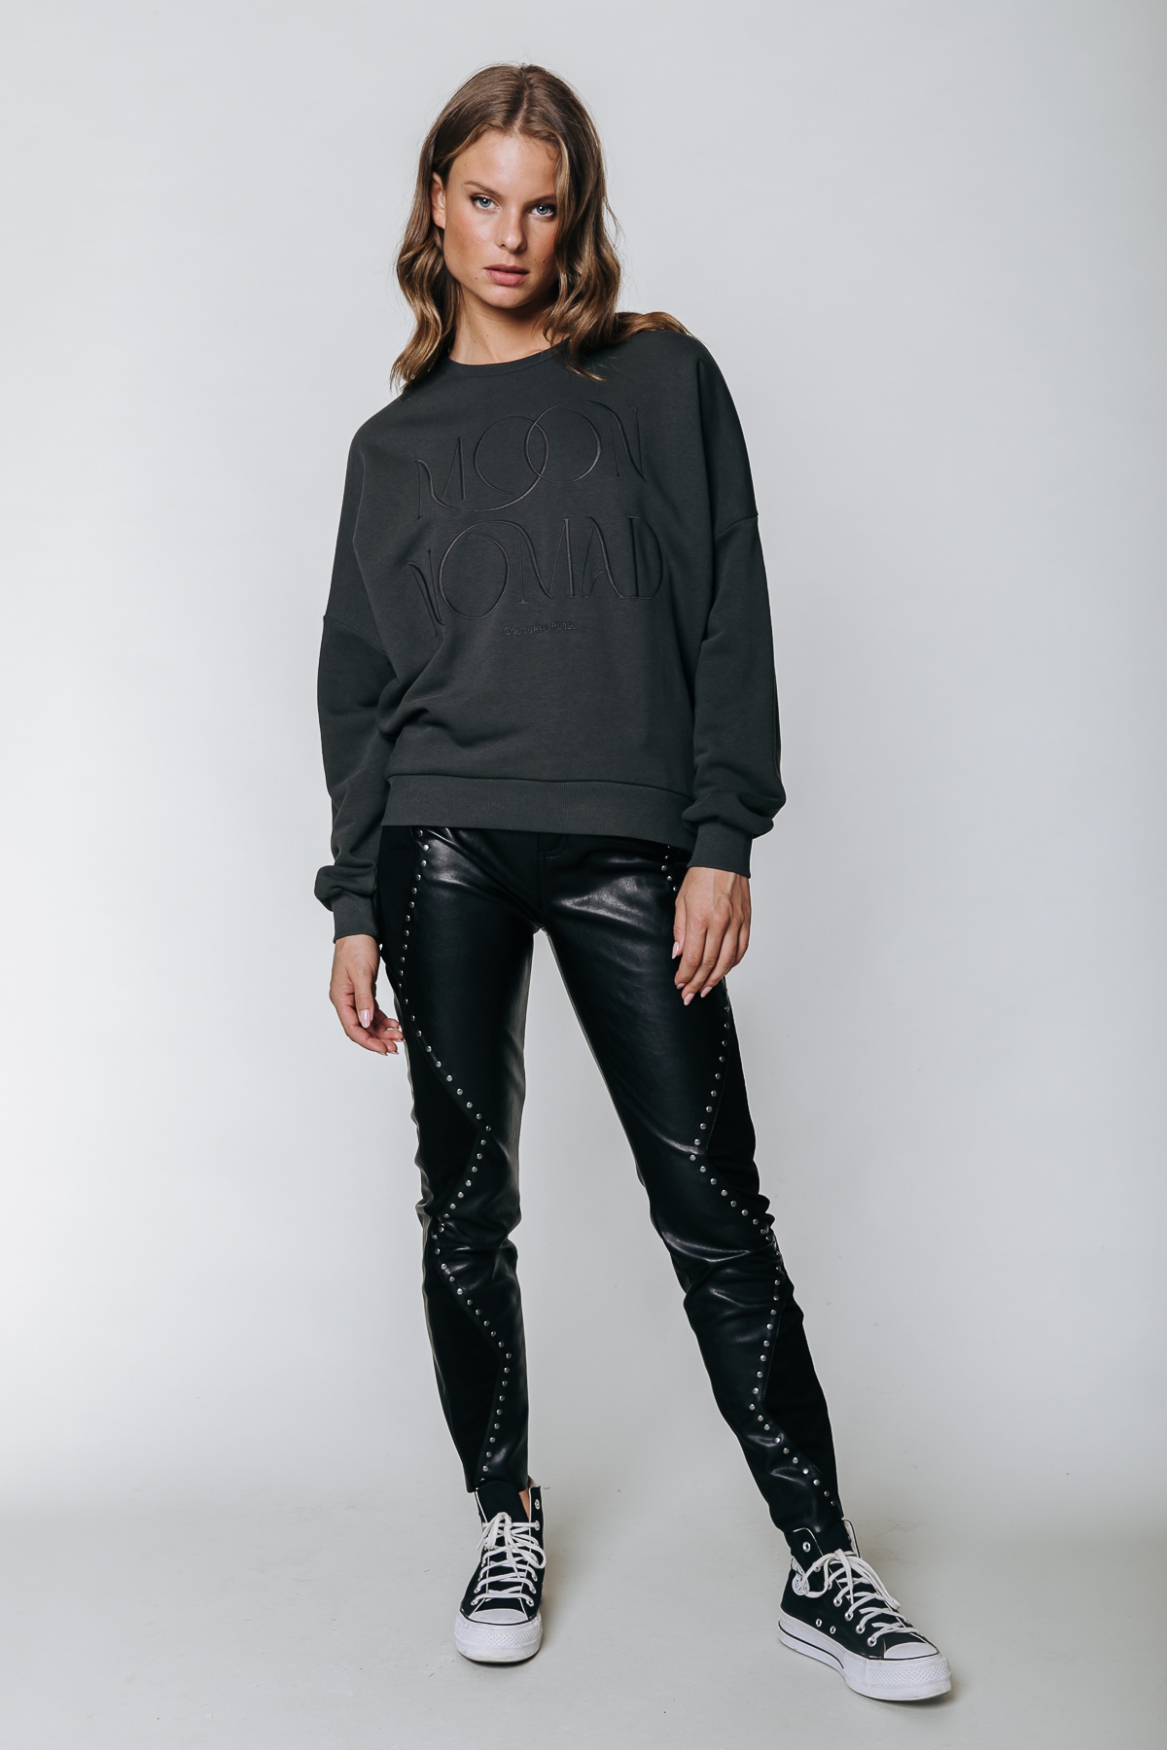 Colourful Rebel Chloe Studs Vegan Leather Pants Black